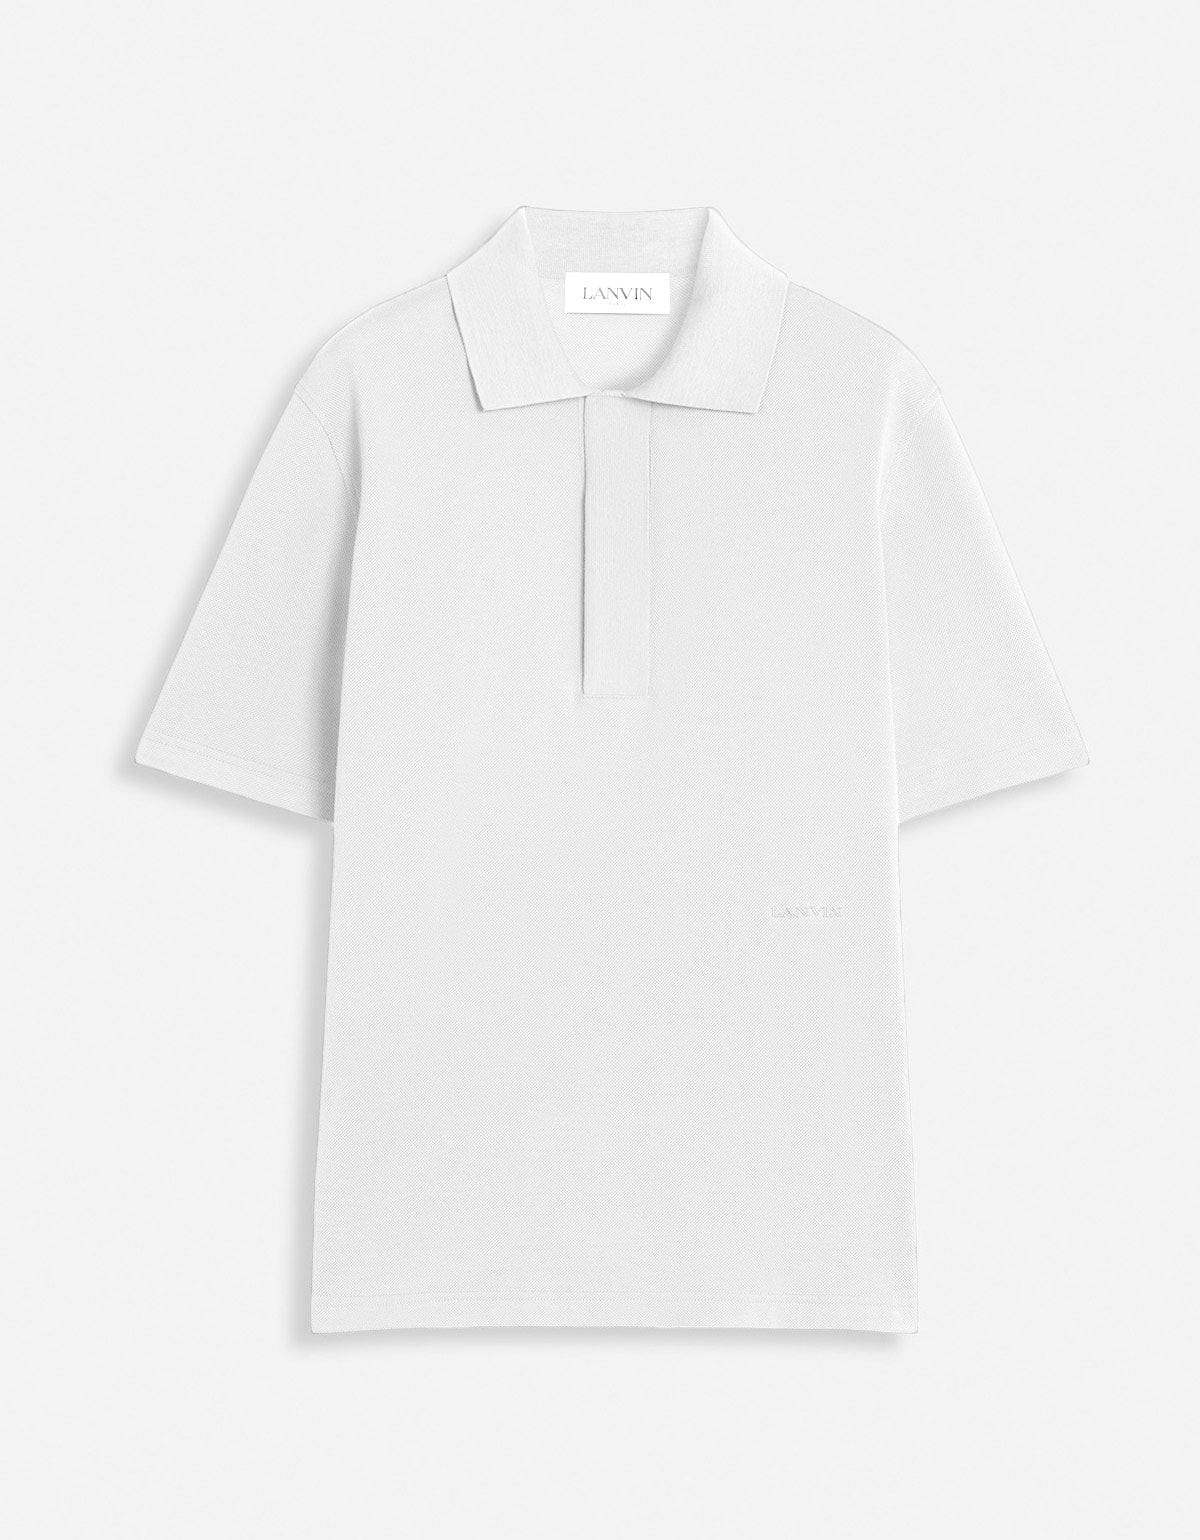 Lanvin White Classic Polo T-Shirt